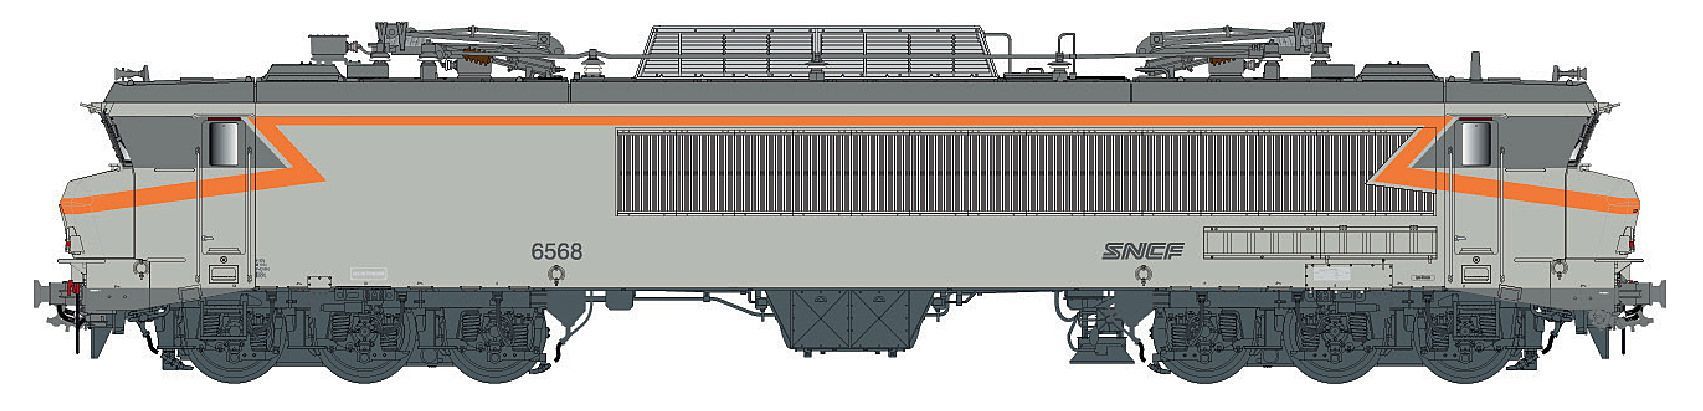 LS Models 10833 - E-Lok CC 6568 SNCF Ep.IV/V grau orange Streifen Nudellogo H0/WS